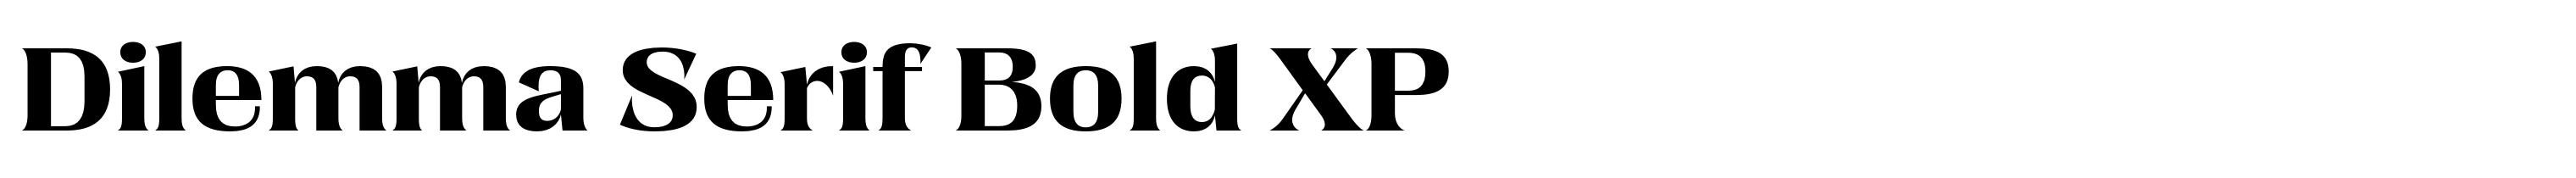 Dilemma Serif Bold XP